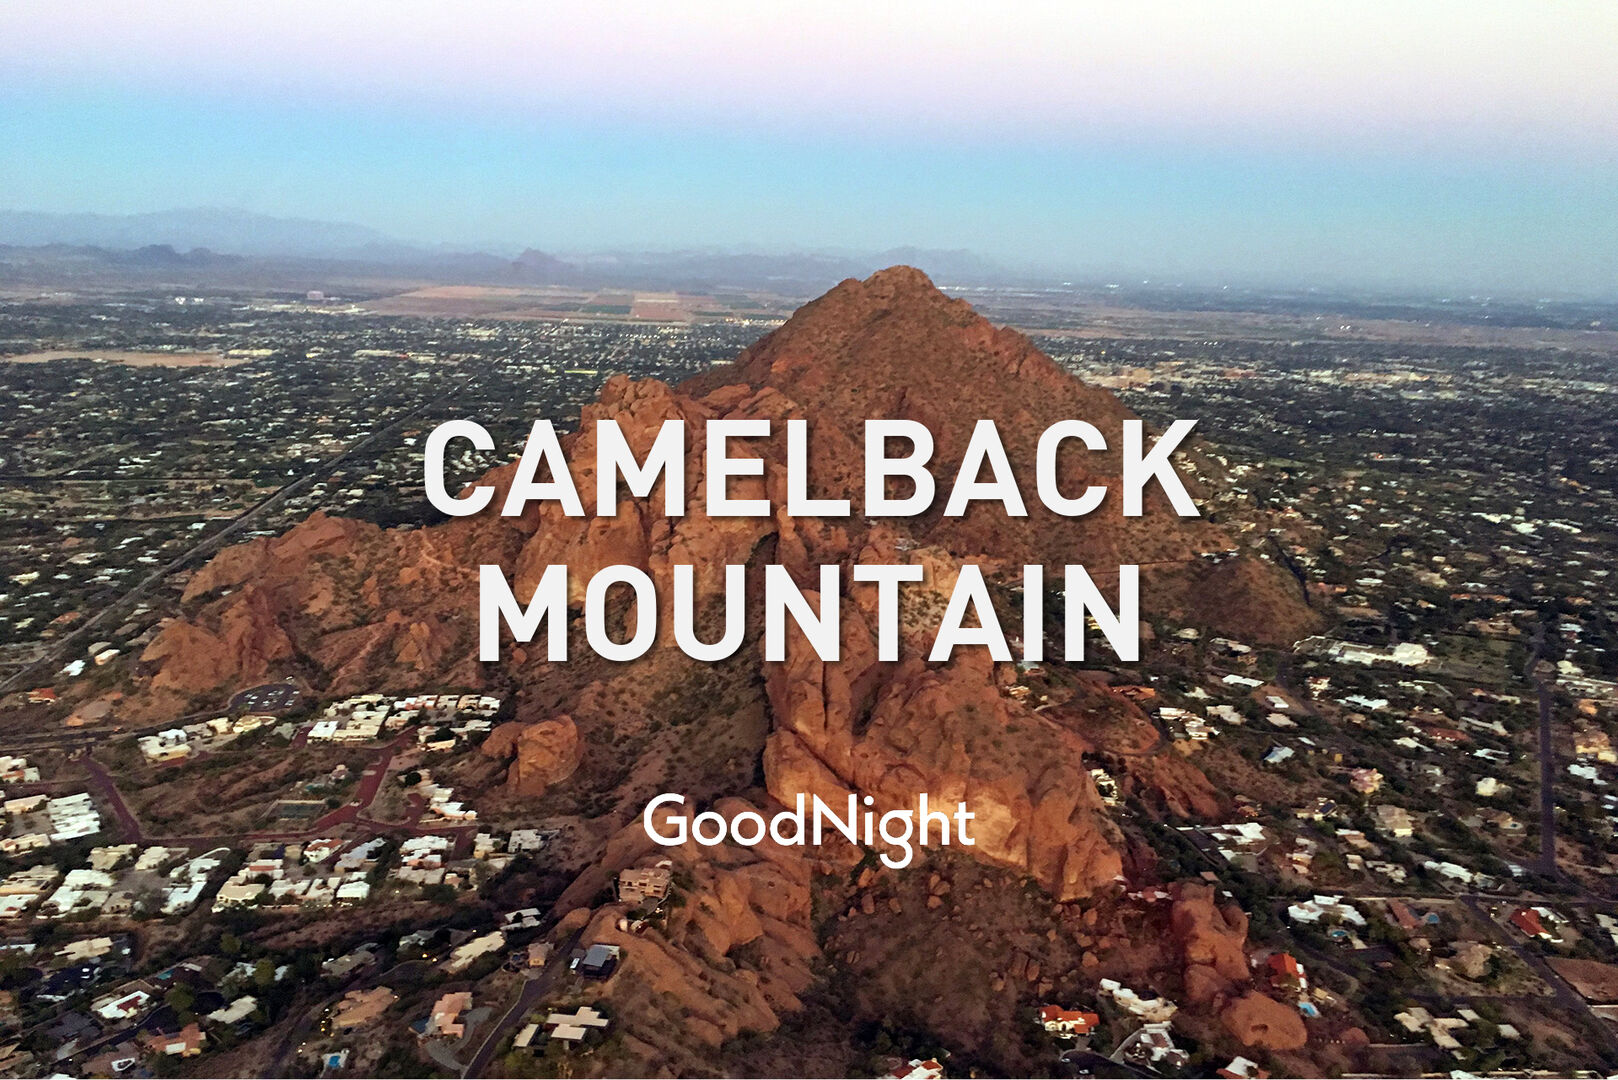 20 mins: Camelback Mountain